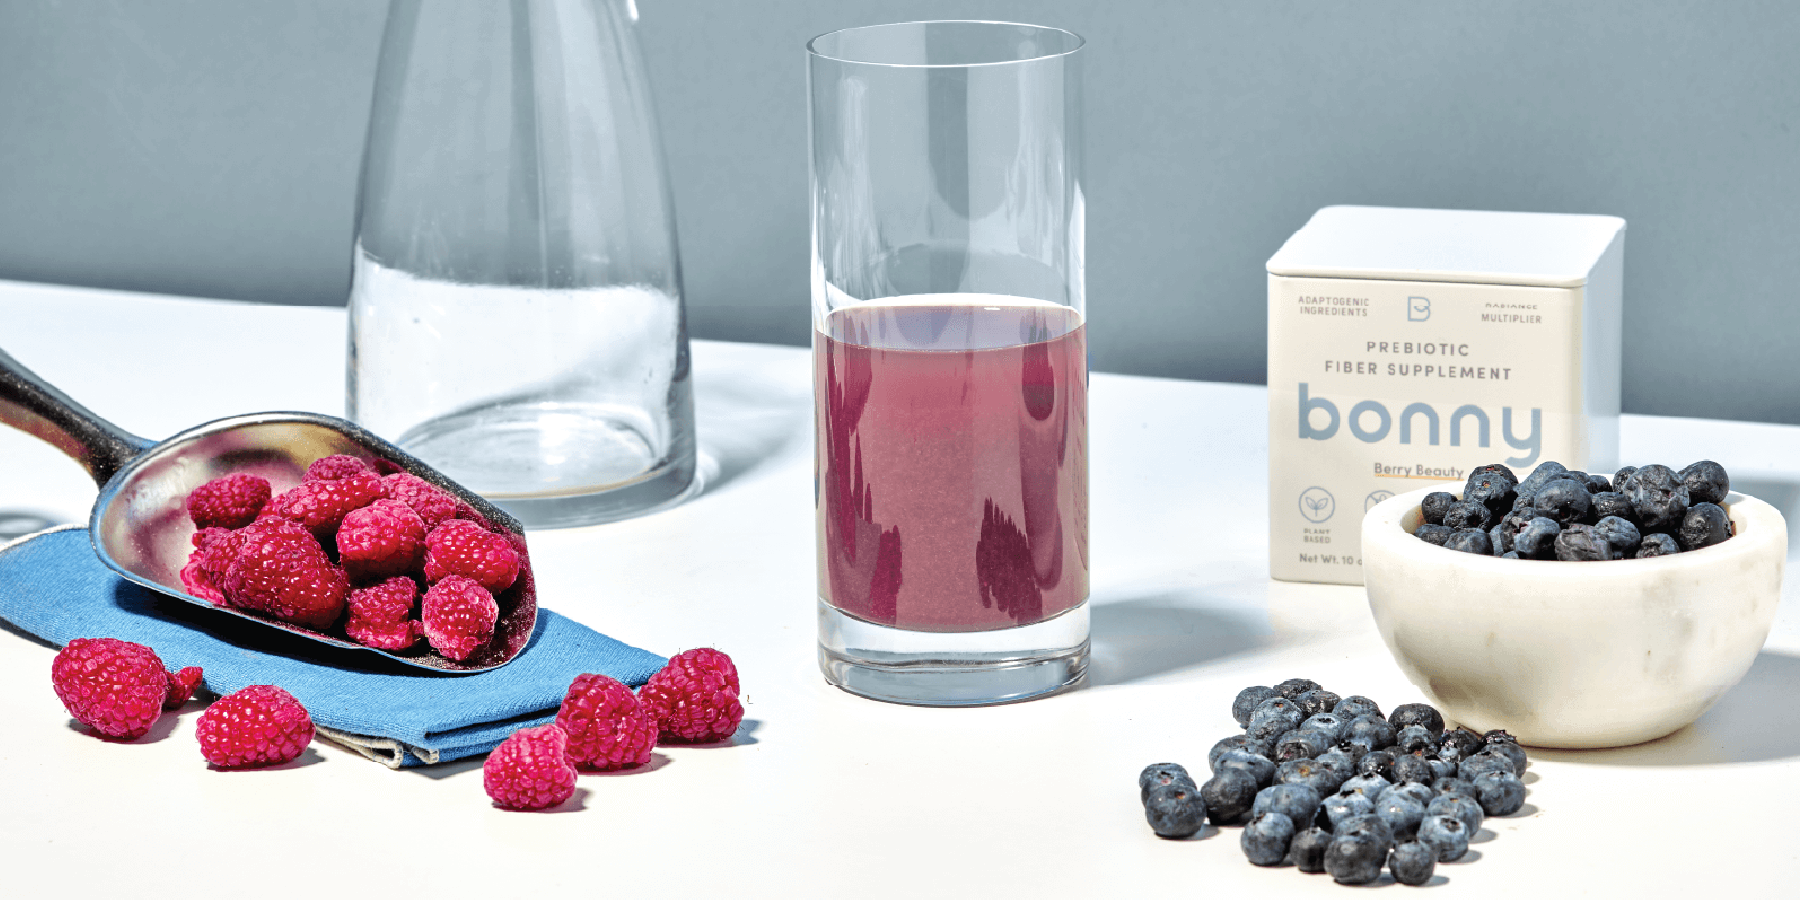 Bonny Prebiotic Fiber with Berries and Glass of Bonny